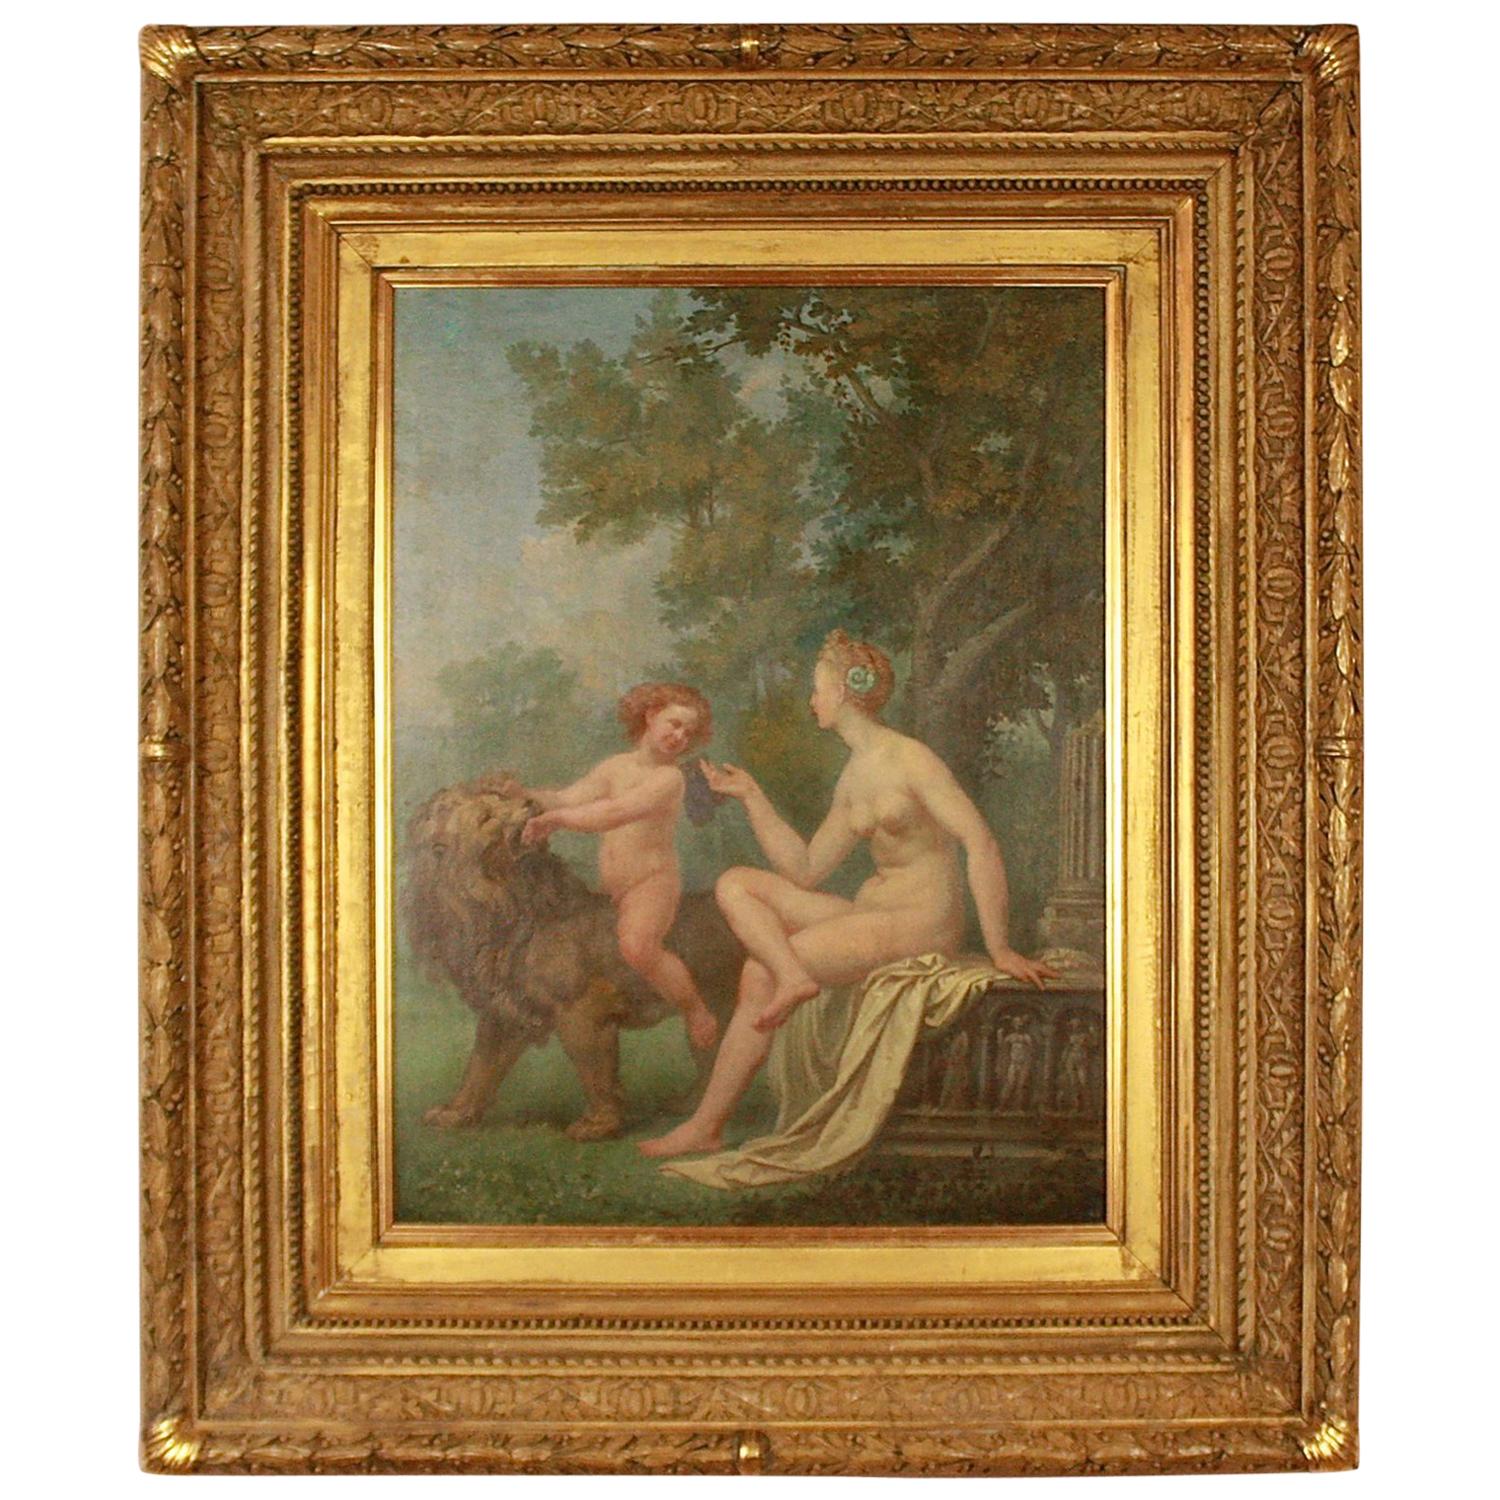 Amor Vincit Omnia, Oil on panel, Follower School of Fontainebleau